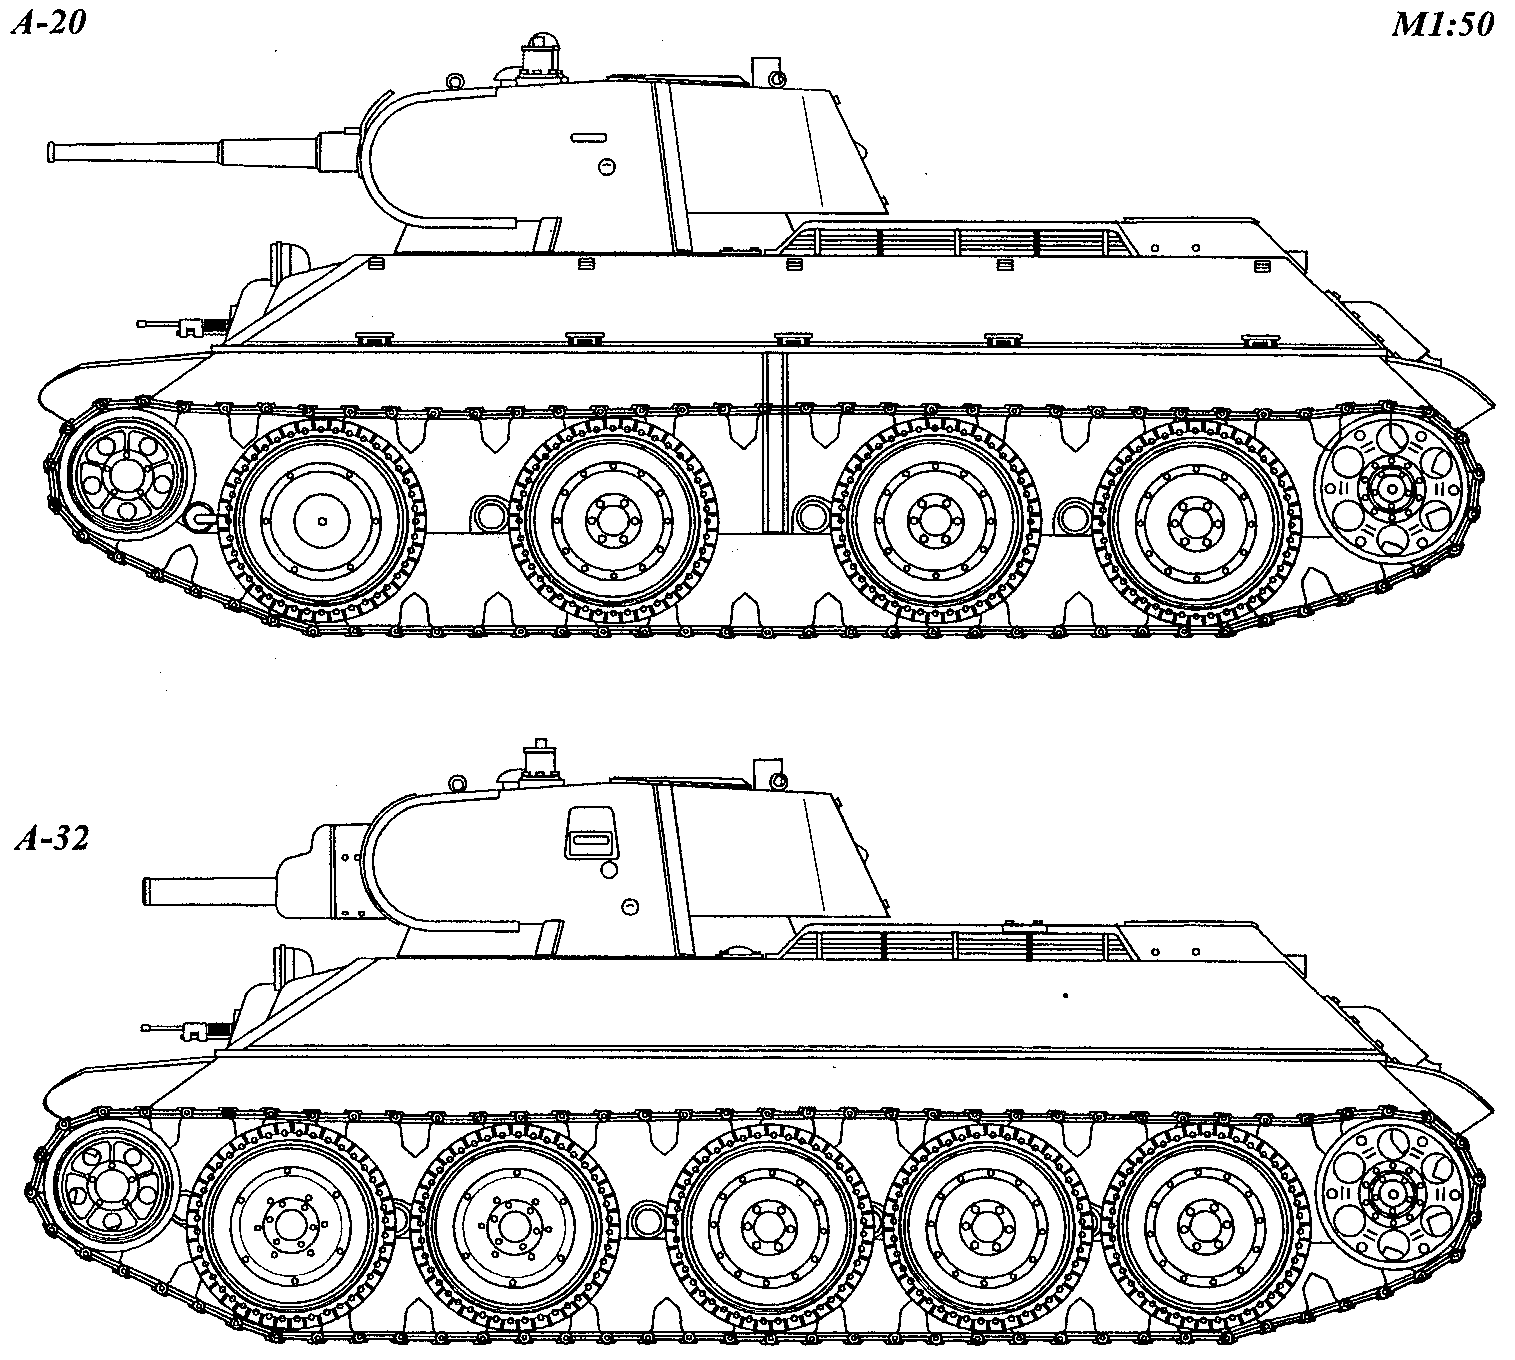 Т-28 — советский средний танк